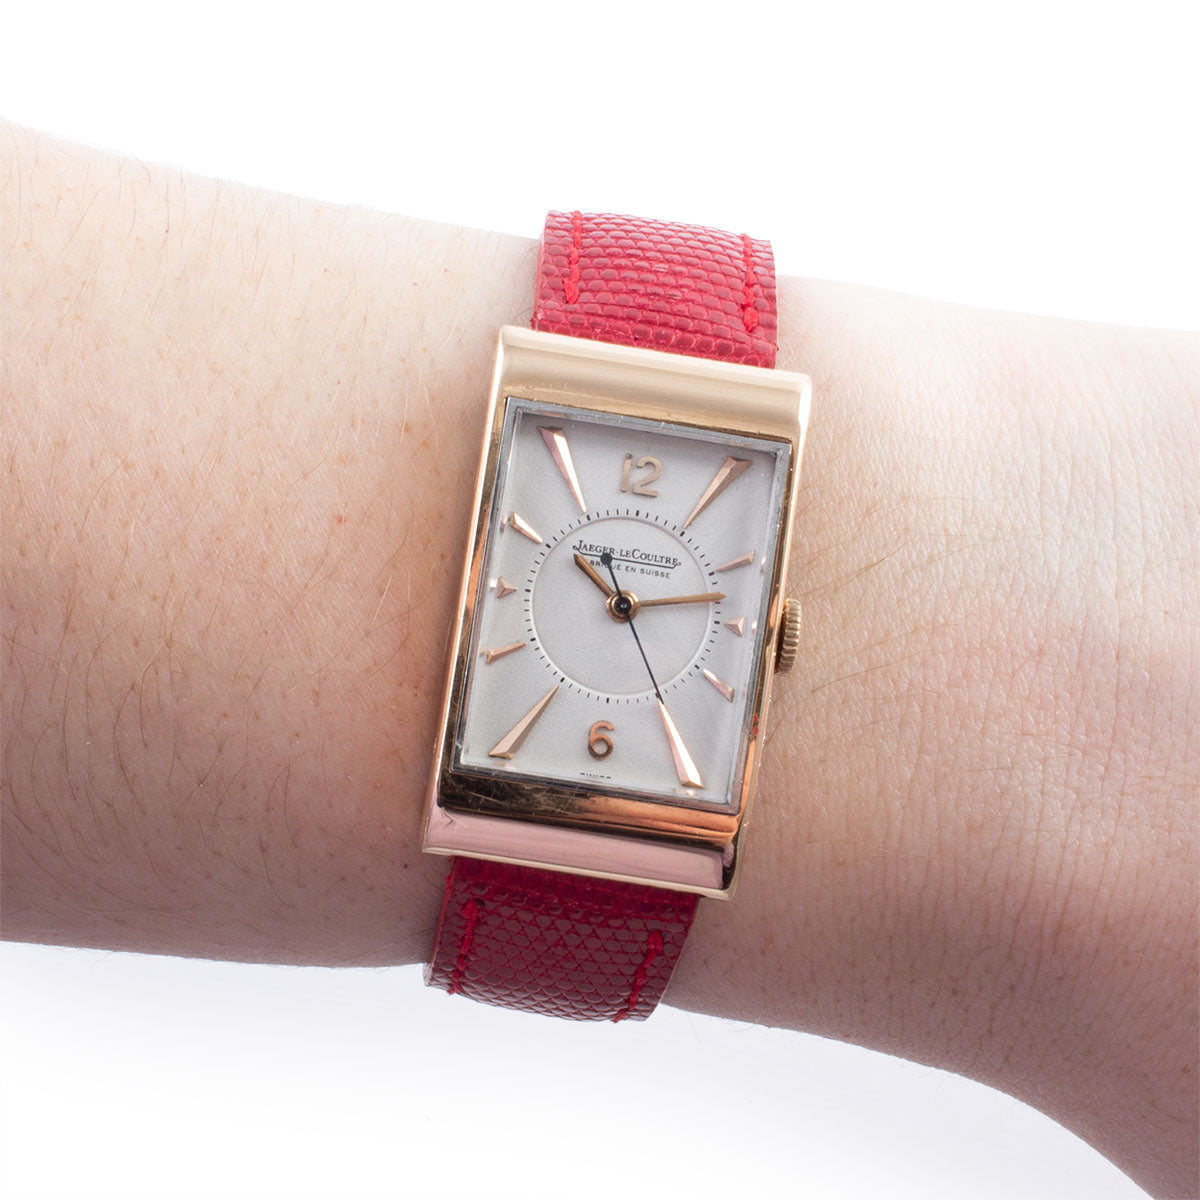 Second-hand watch - Jaeger Lecoultre - Art Deco - 2600€